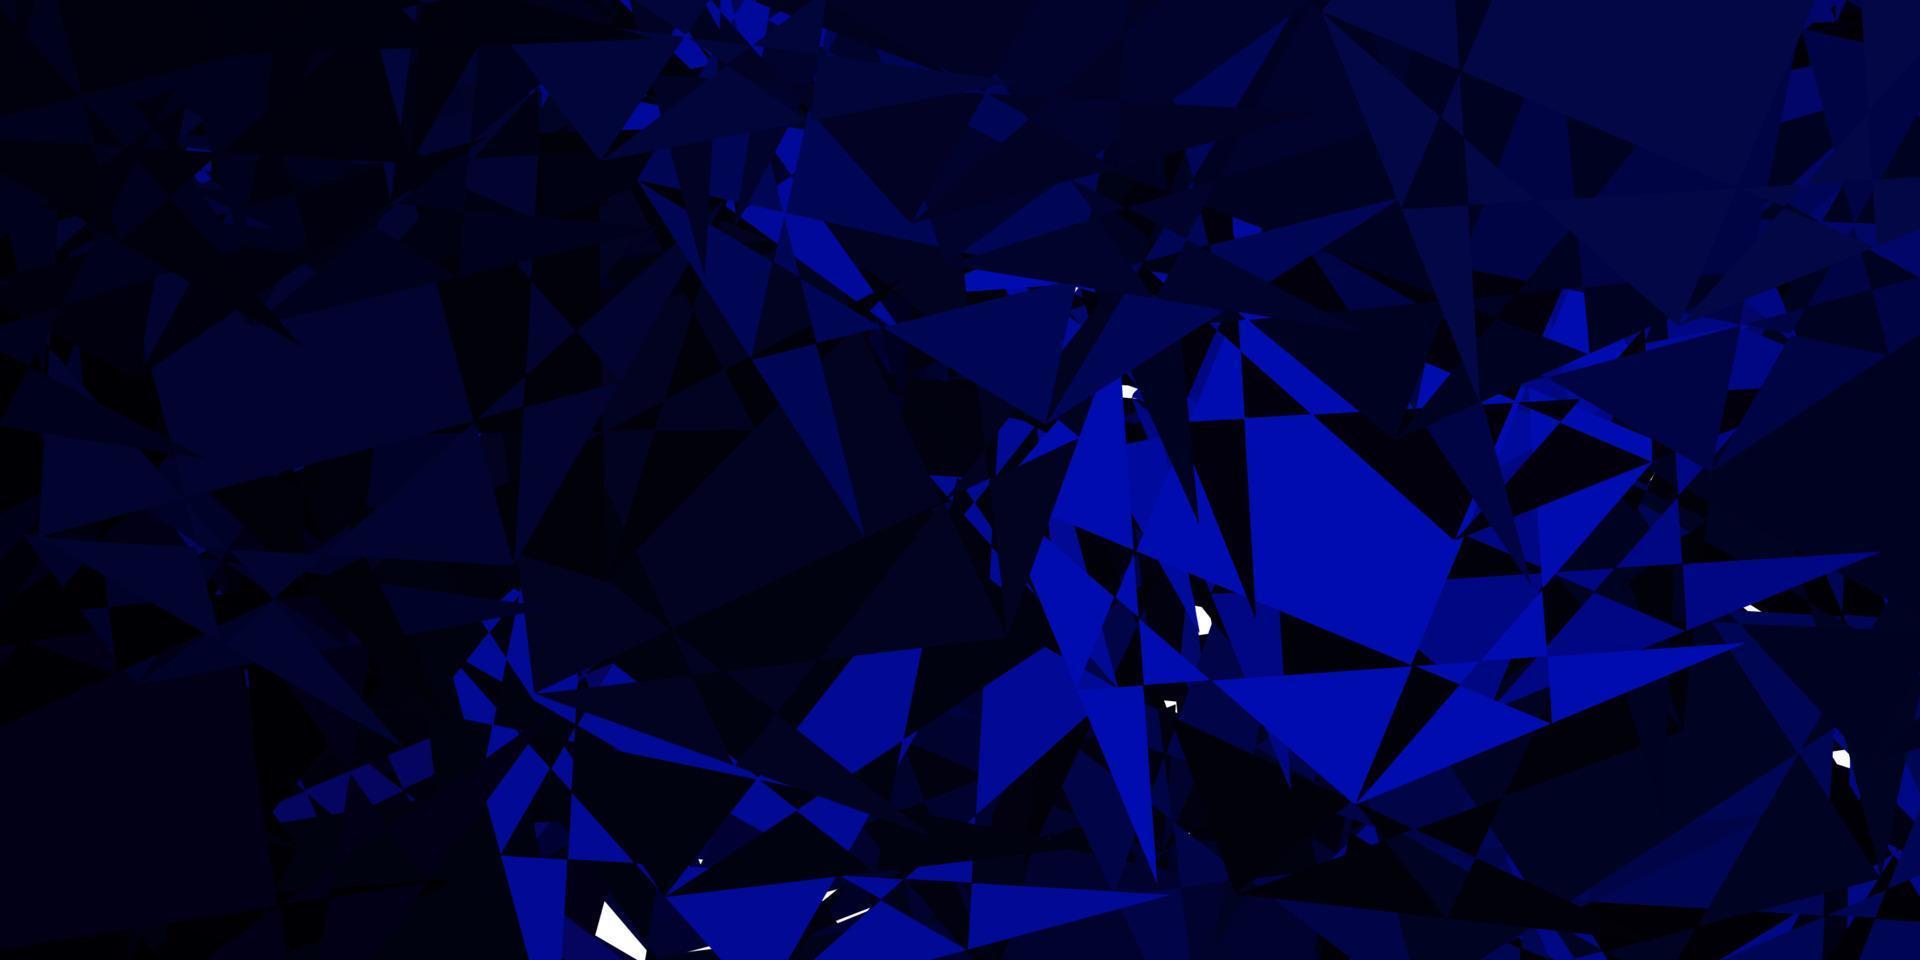 Fondo de vector azul oscuro con formas poligonales.